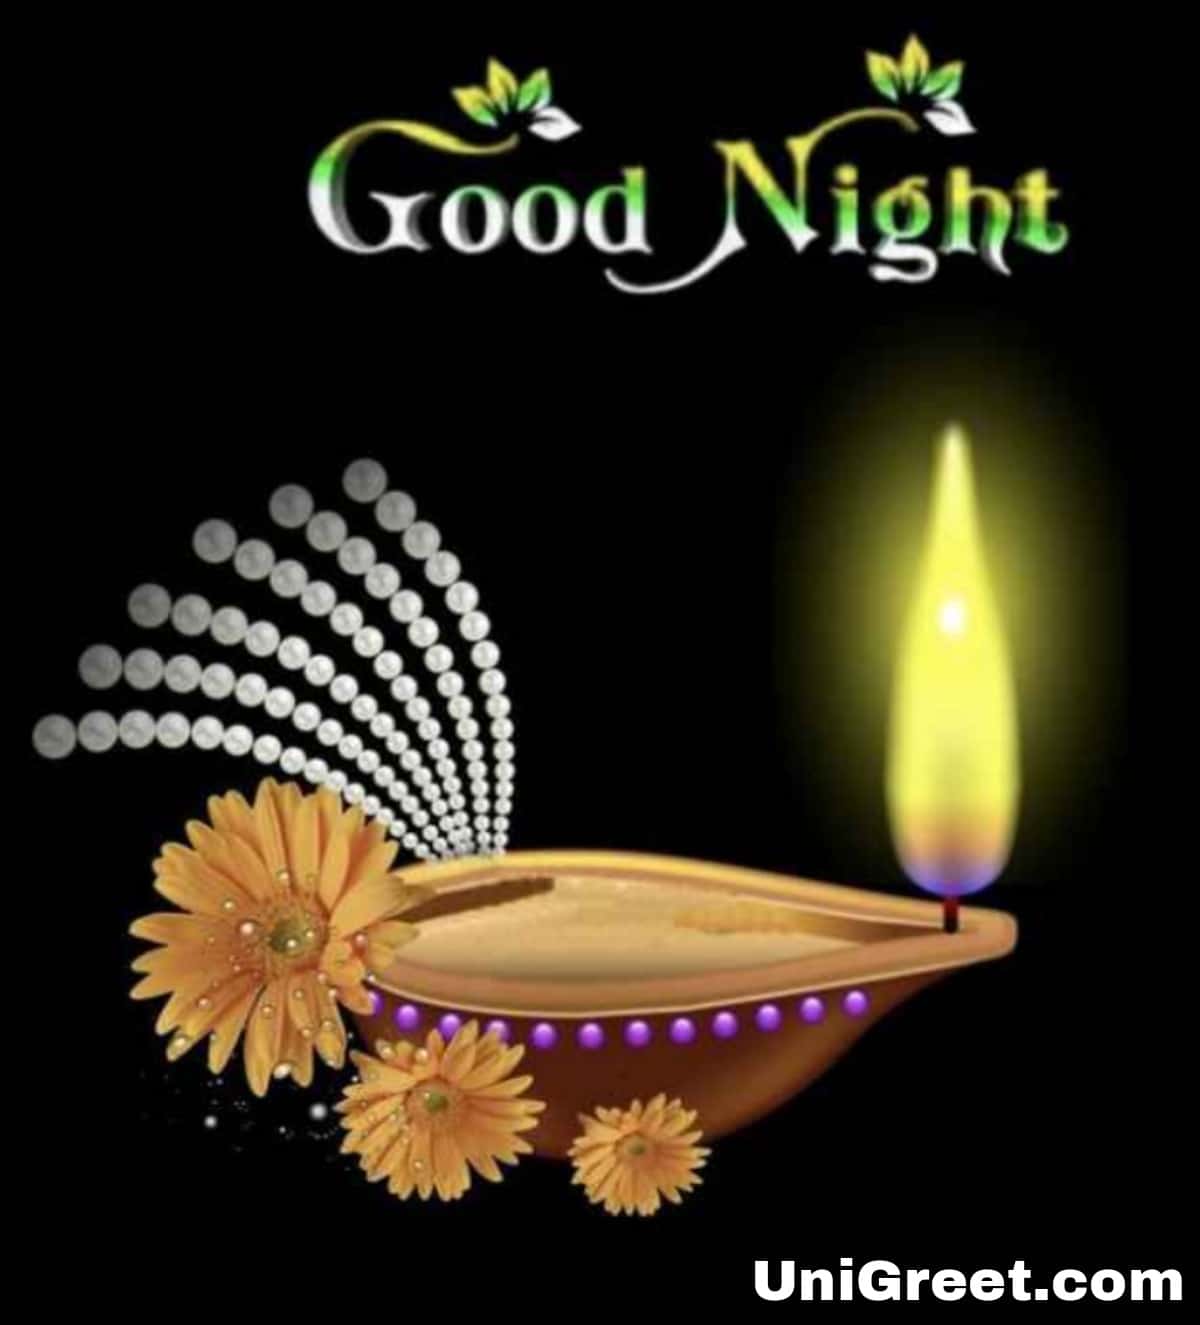 New Good night image for Diwali